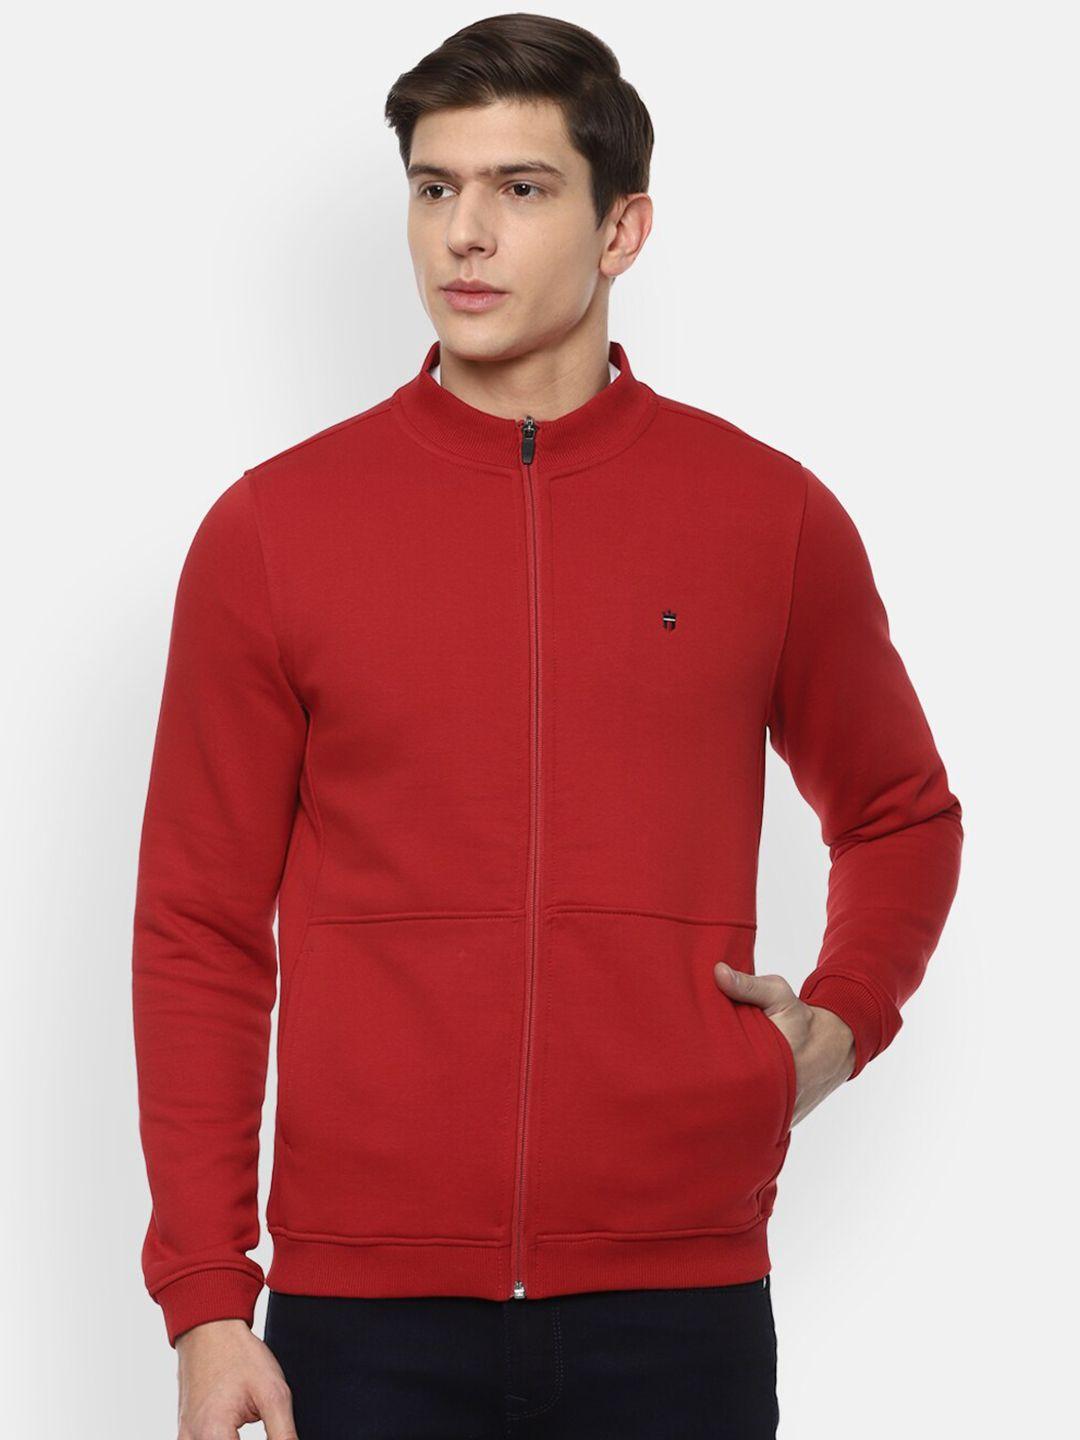 louis-philippe-sport-men-red-solid-sweatshirt